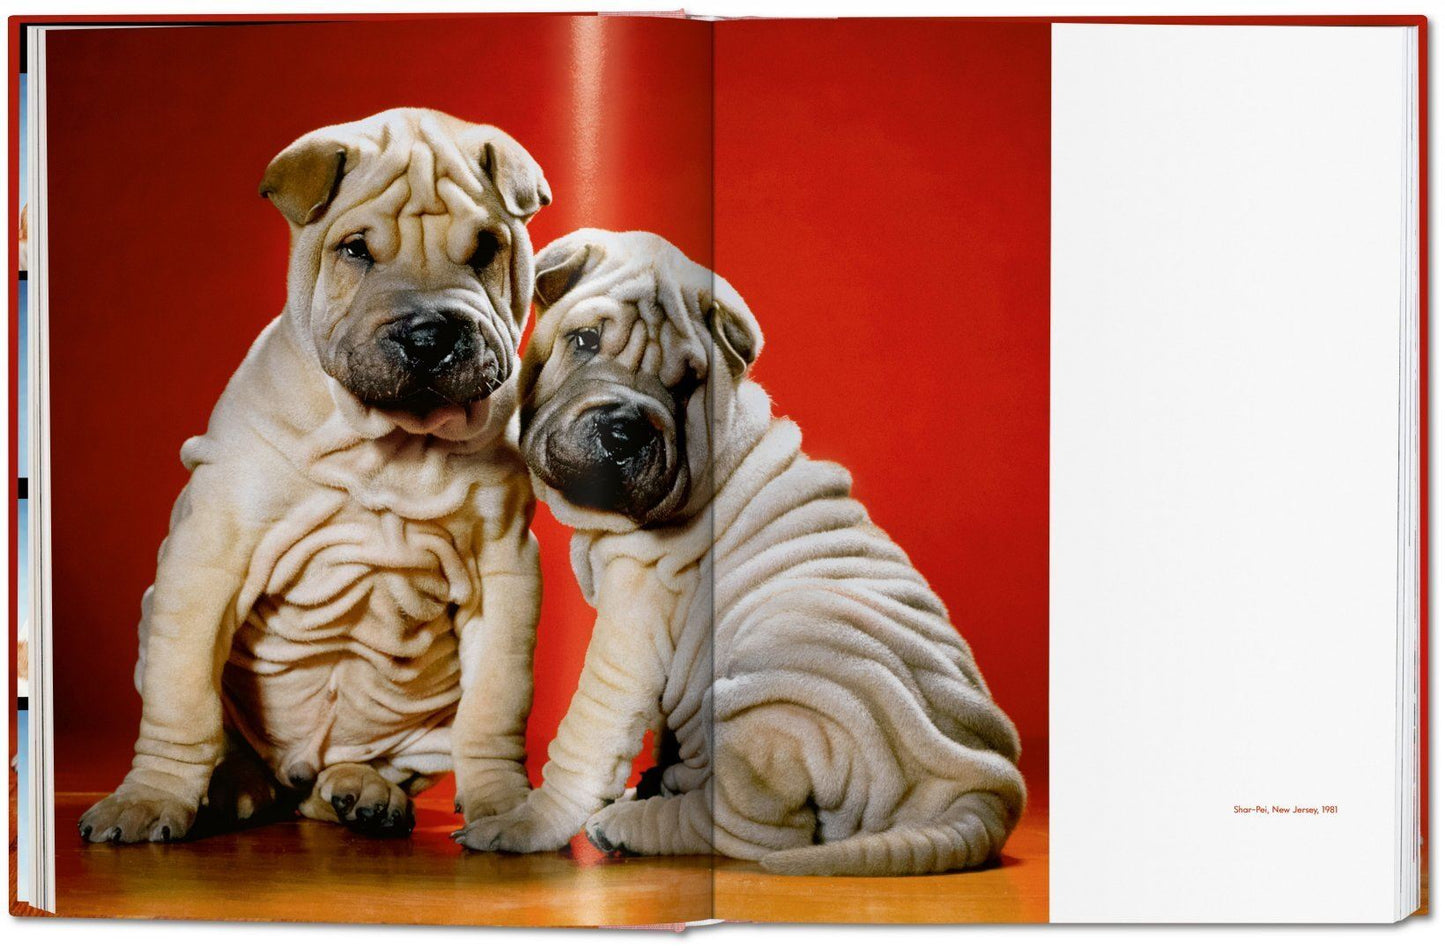 Walter Chandoha. Dogs. Photographs